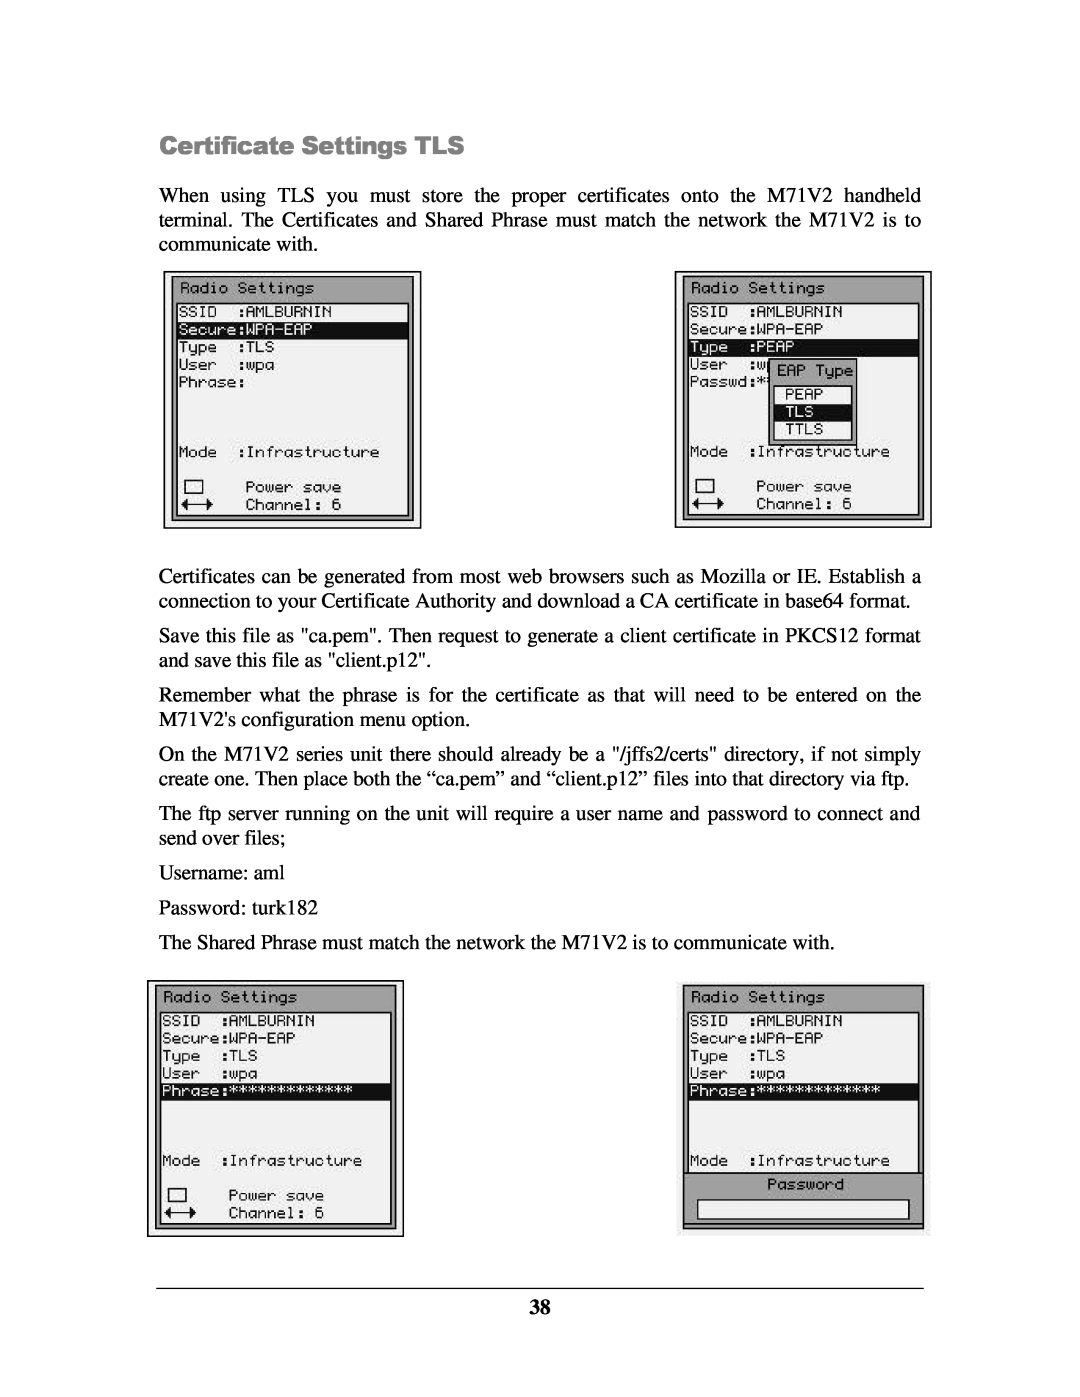 IBM M71V2 manual Certificate Settings TLS 